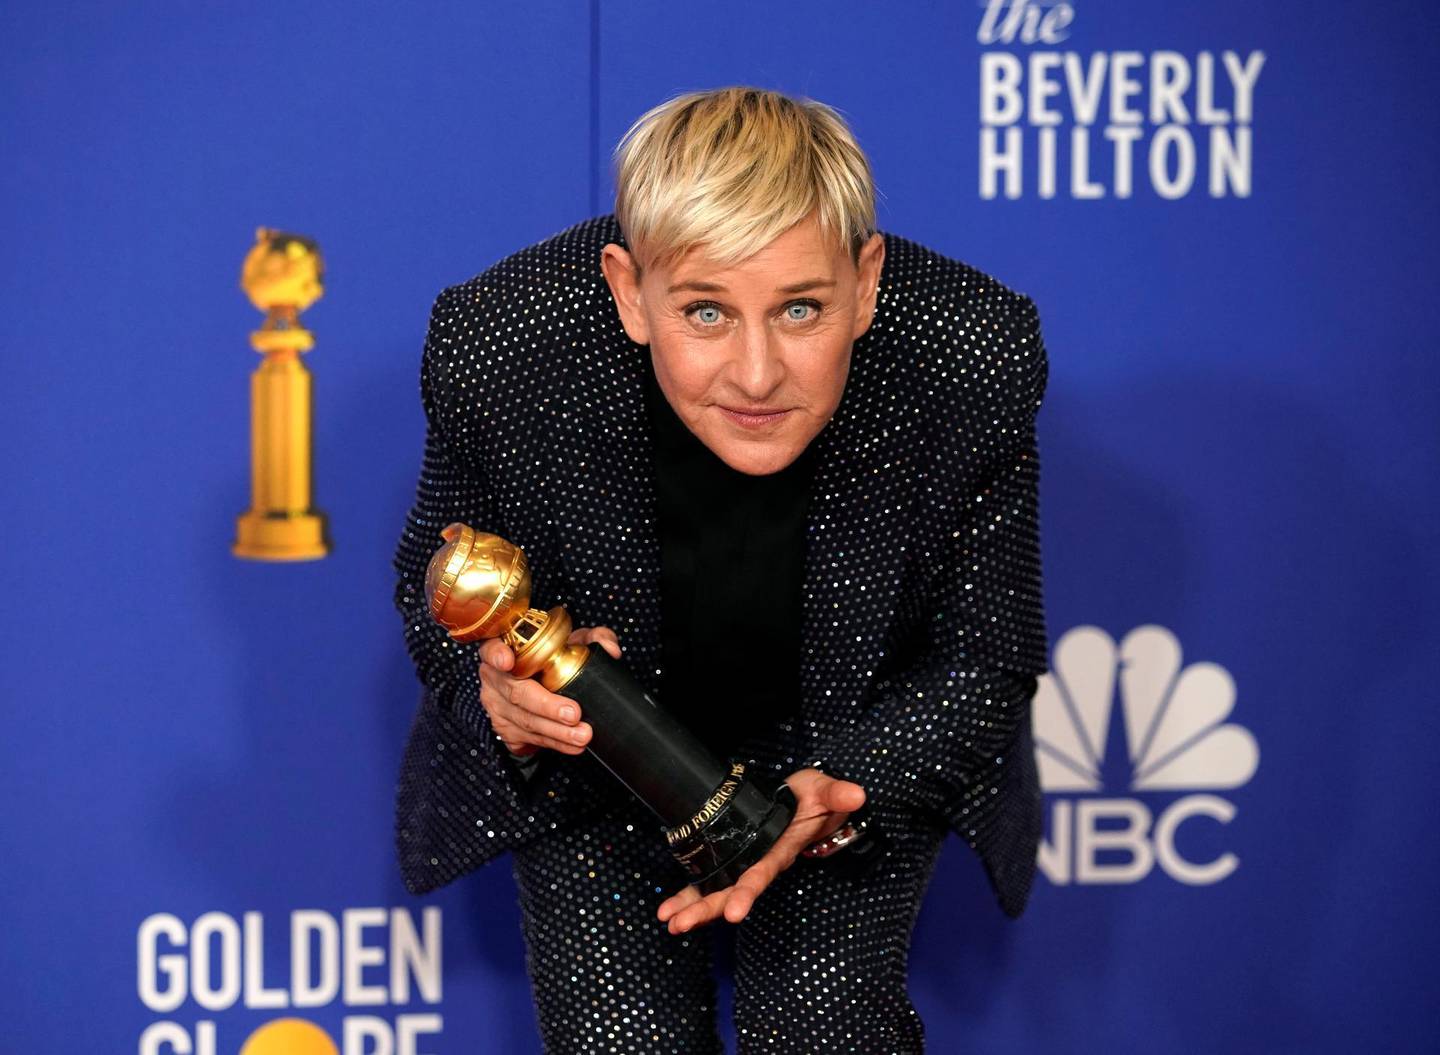 FILE PHOTO: 77th Golden Globe Awards - Photo Room - Beverly Hills, California, U.S., January 5, 2020 - Ellen DeGeneres poses backstage with her Carol Burnett award. REUTERS/Mike Blake/File Photo